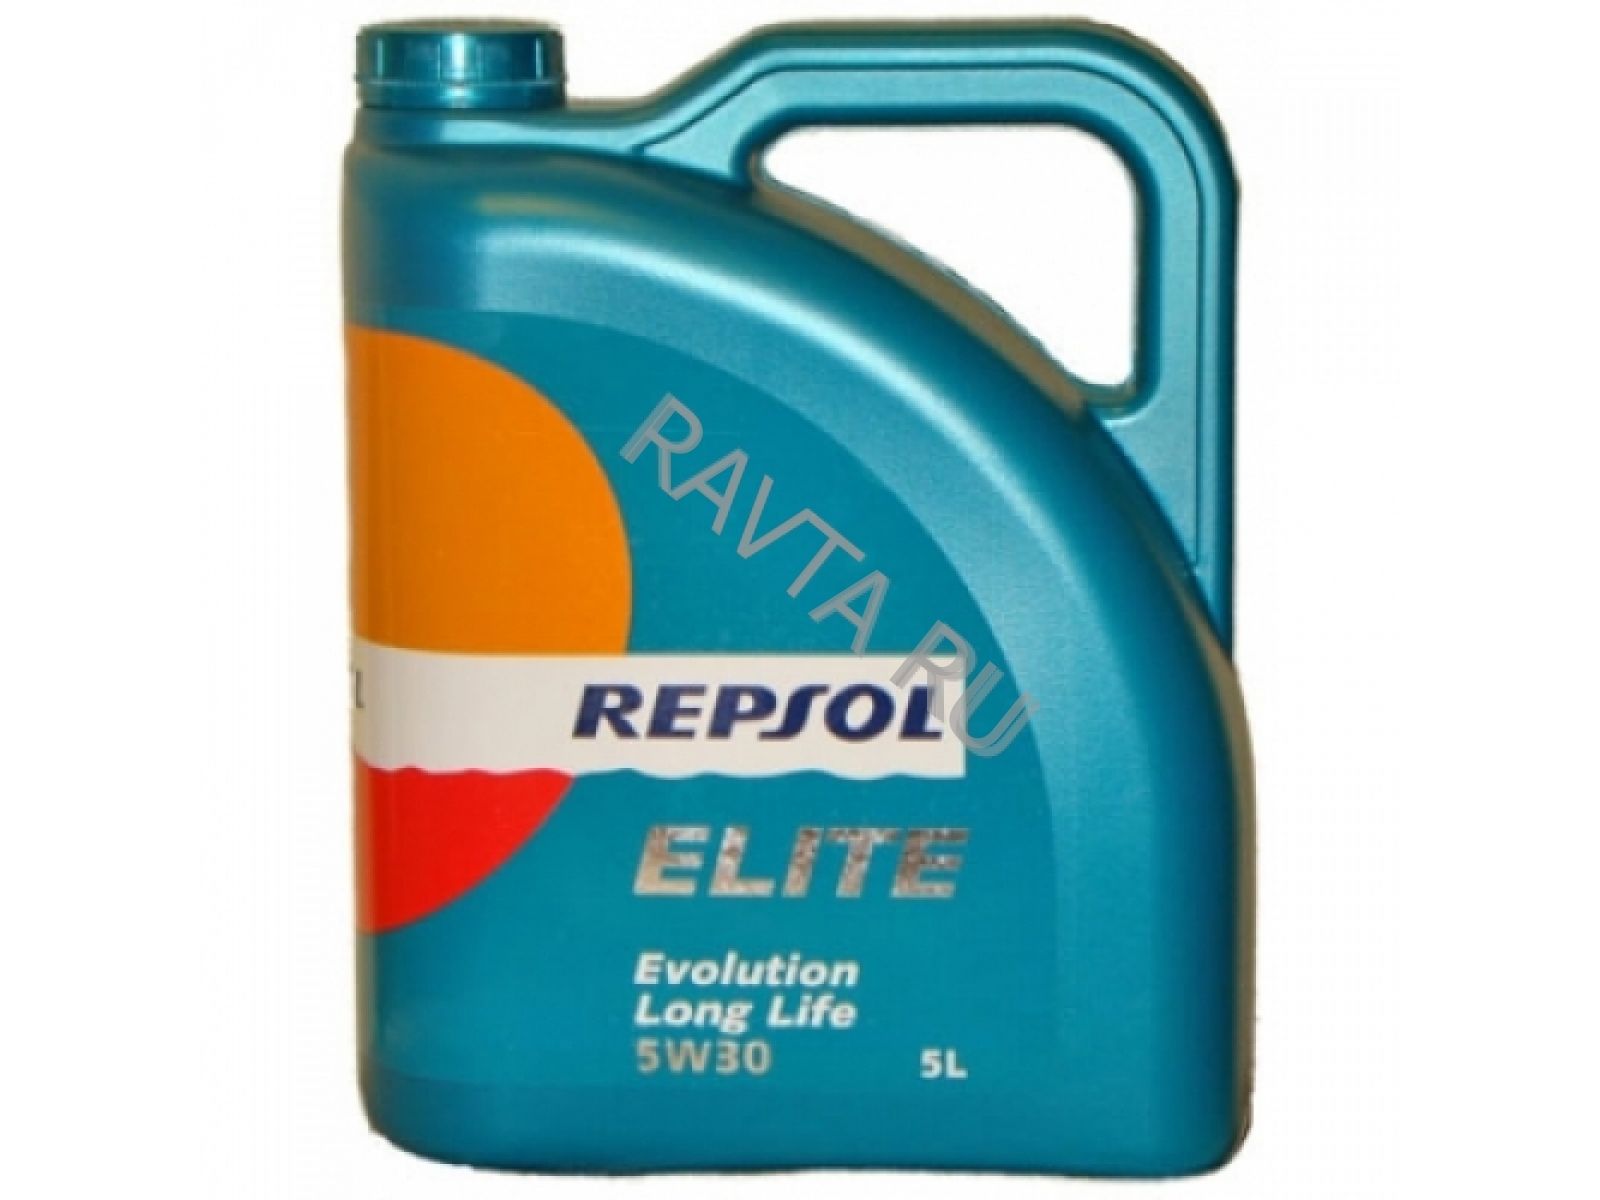 Elite long life 5w 30. Repsol Elite Evolution long Life 5w30. Масло моторное Repsol Rp Elite Evolution long Life 5w30. Масло моторное 5w30 Repsol Elite long Life. Repsol Rp Elite Evolution 5w30.